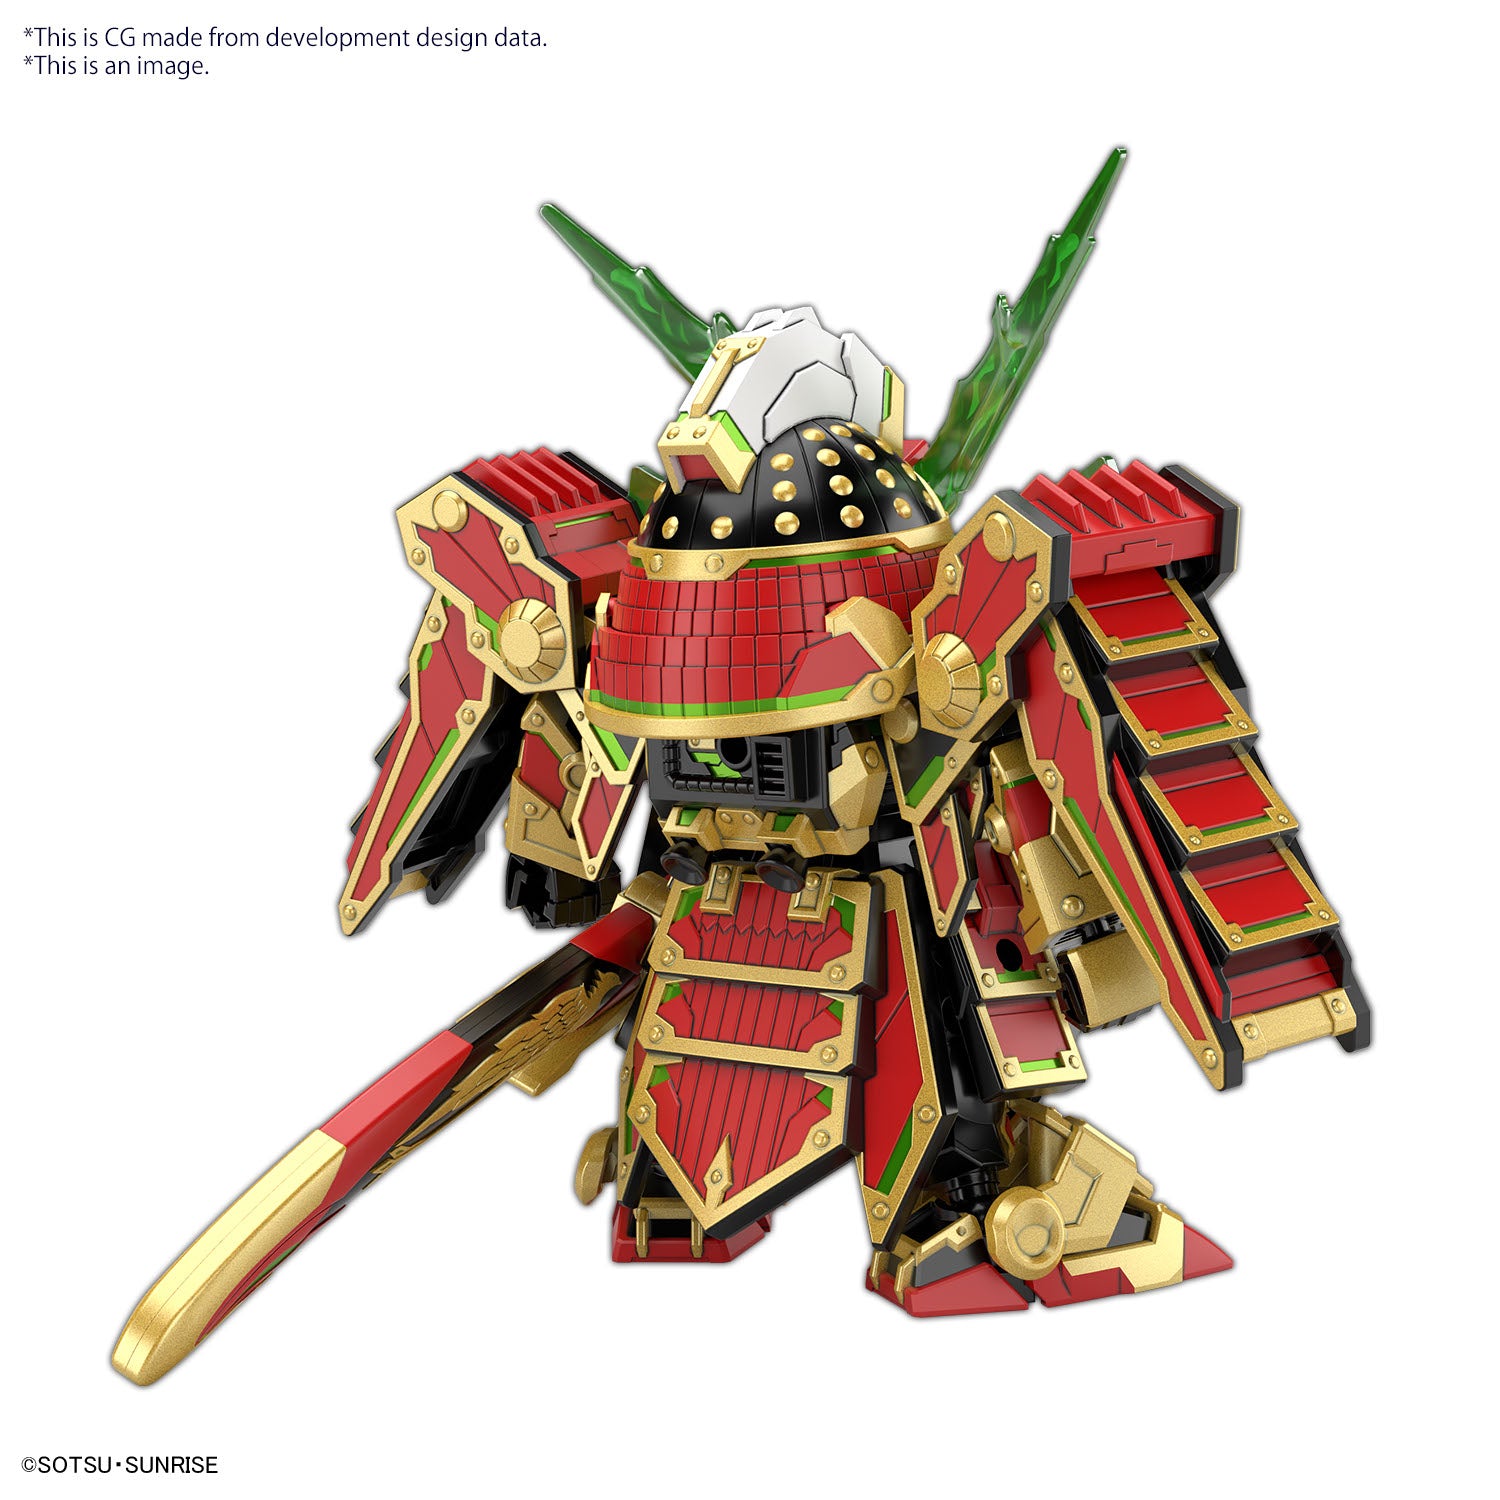 GUNDAM - SDW Heroes Musha Gundam The 78th - Model Kit